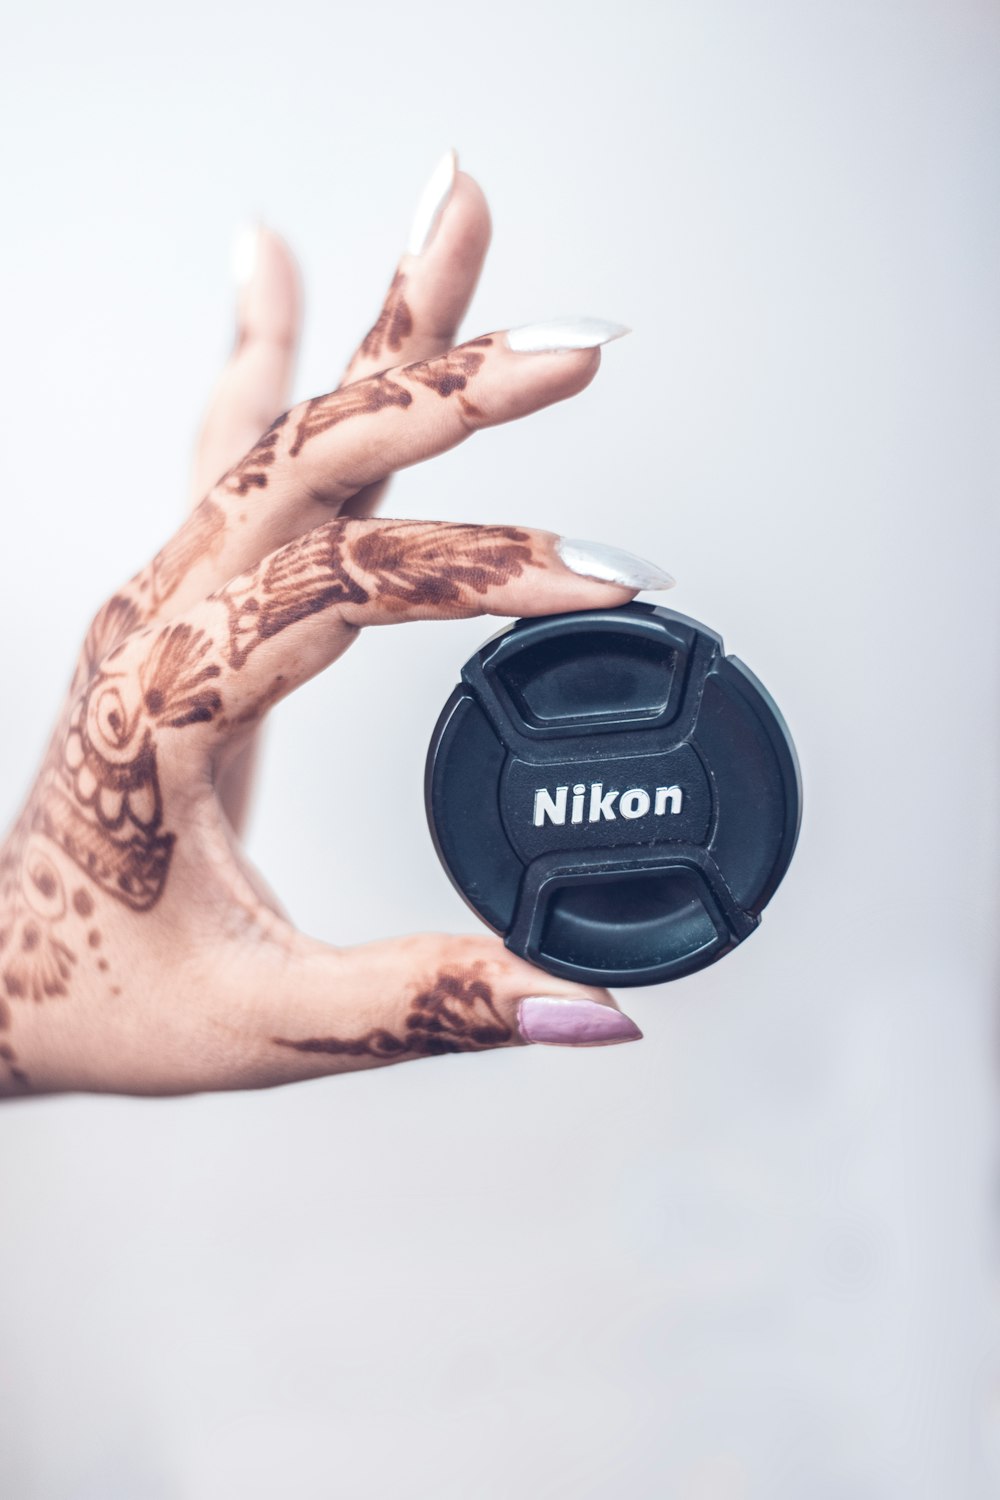 person holding black Nikon camera lens cover